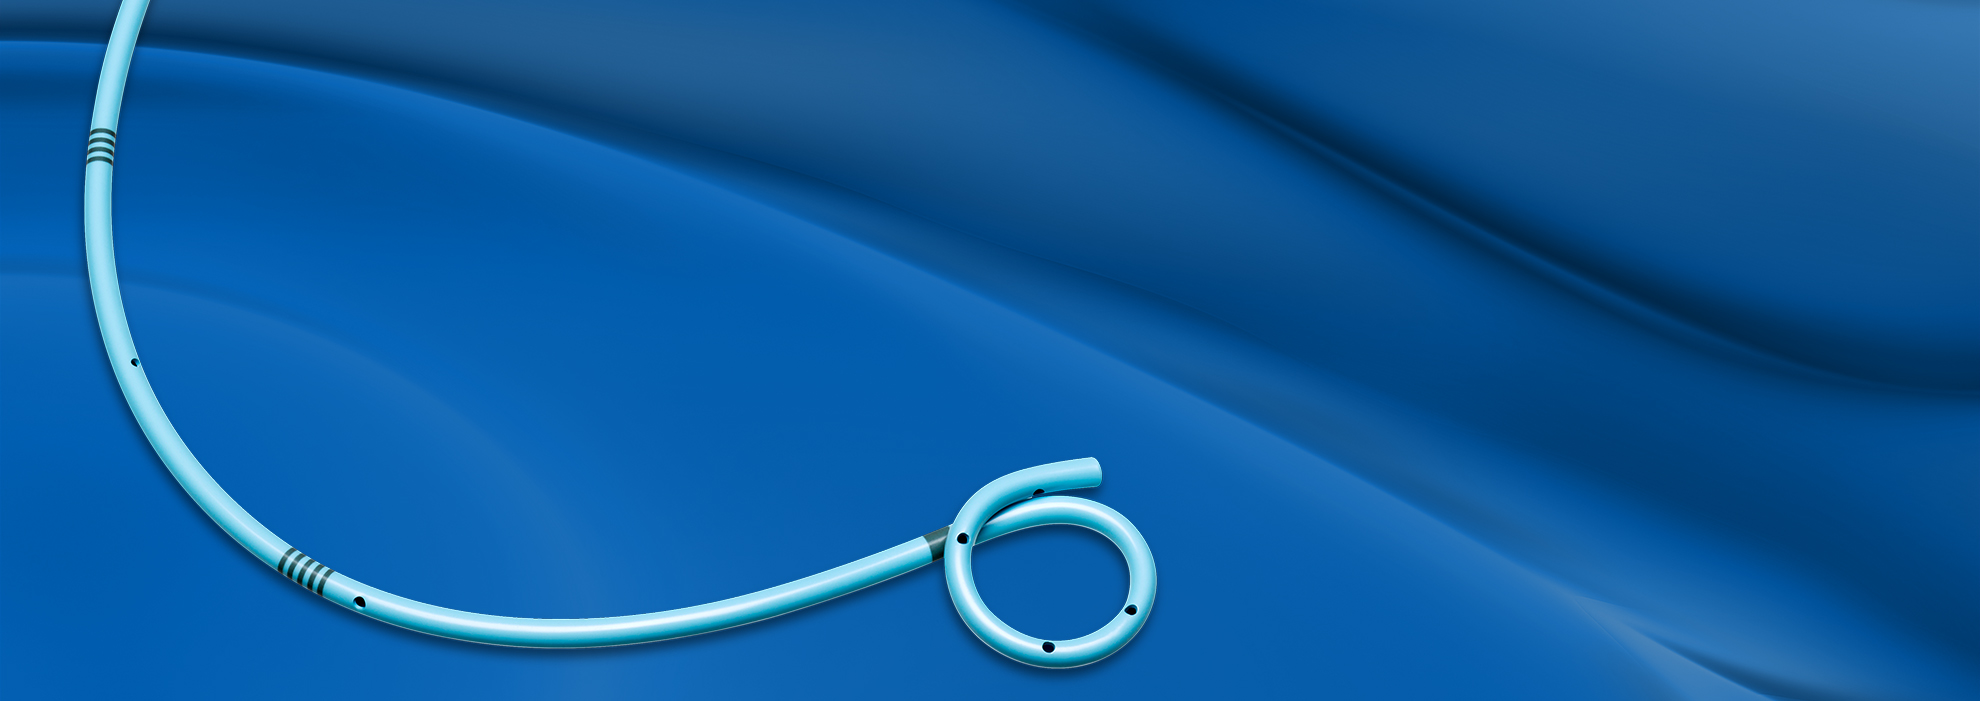 Tria stent on blue background